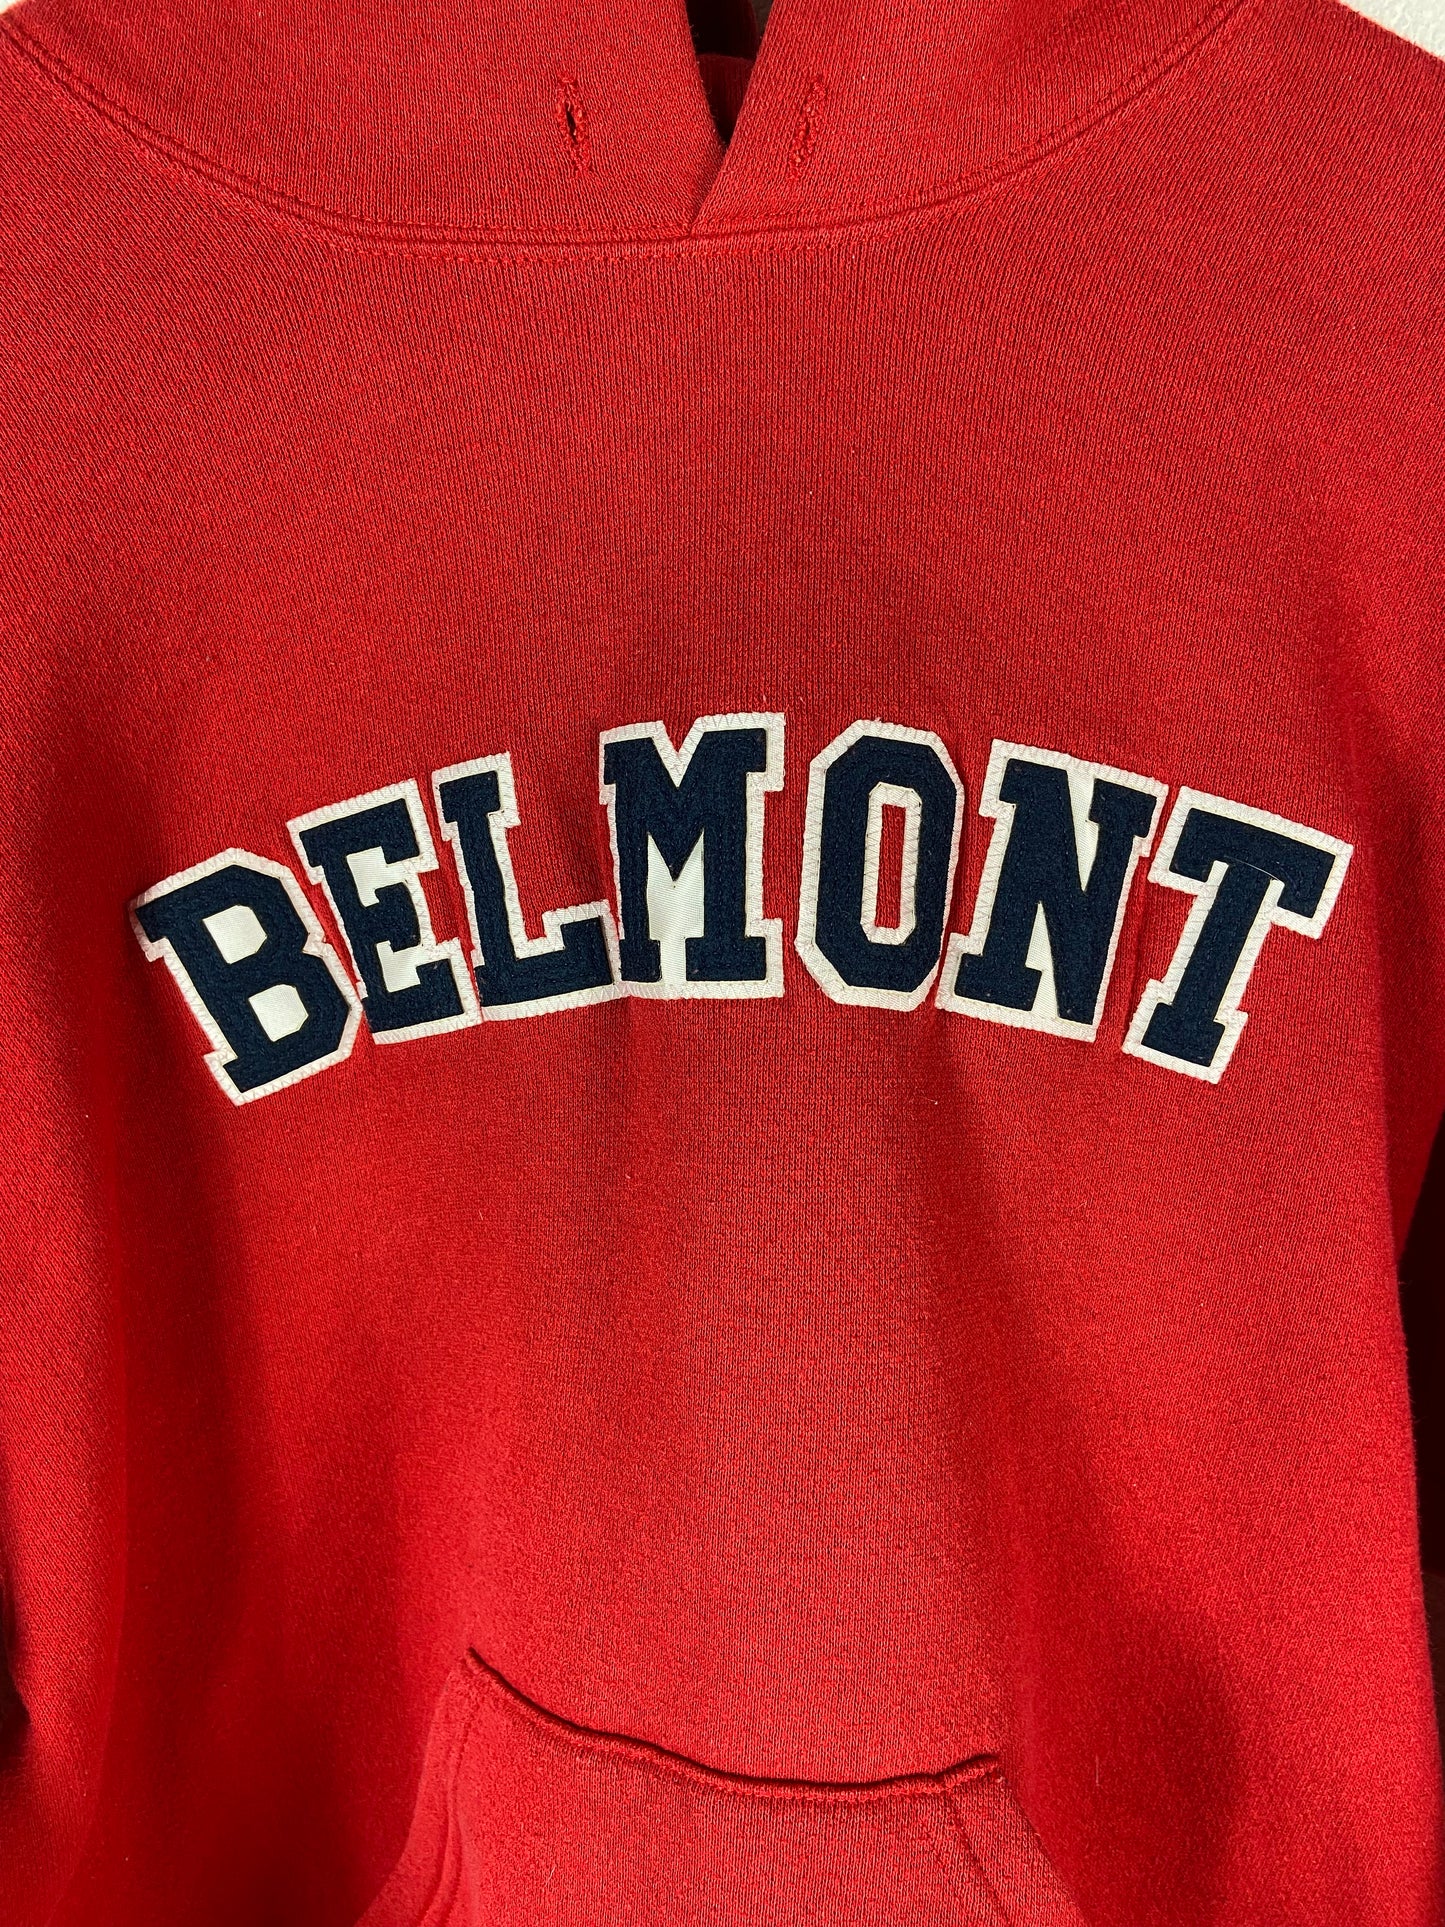 VTG Belmont Red Hoodie Sweatshirt Sz M